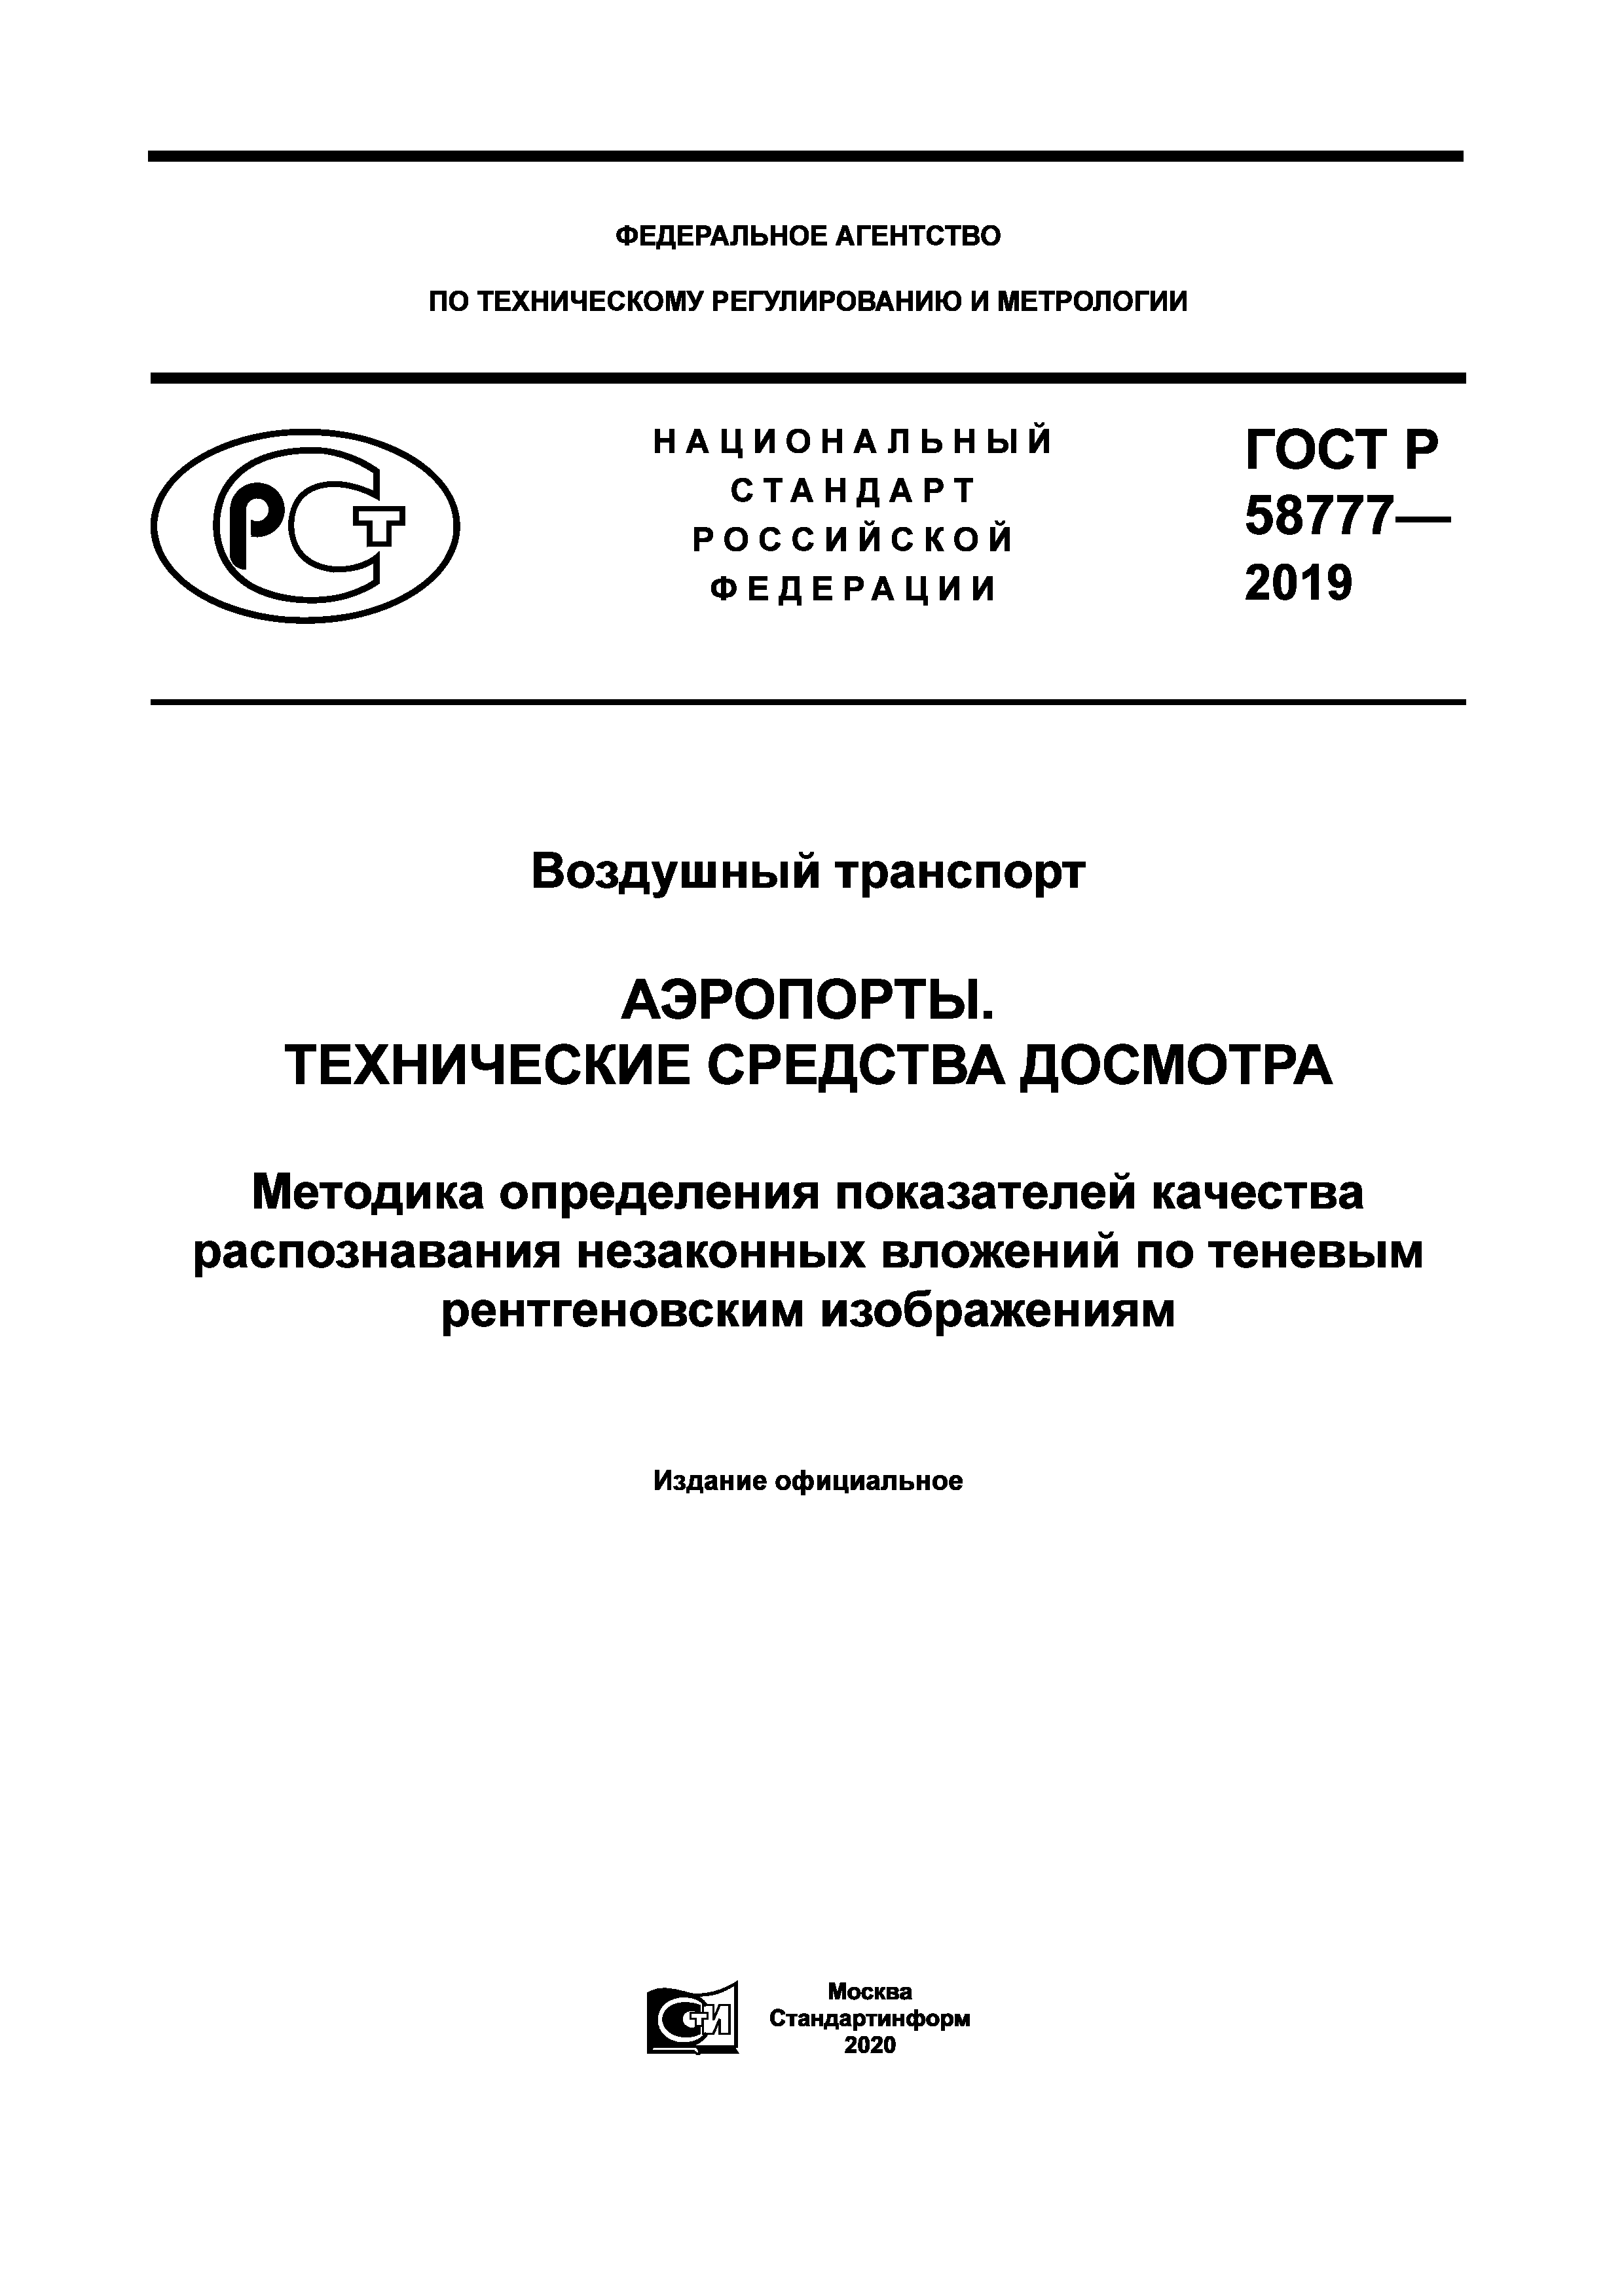 ГОСТ Р 58777-2019